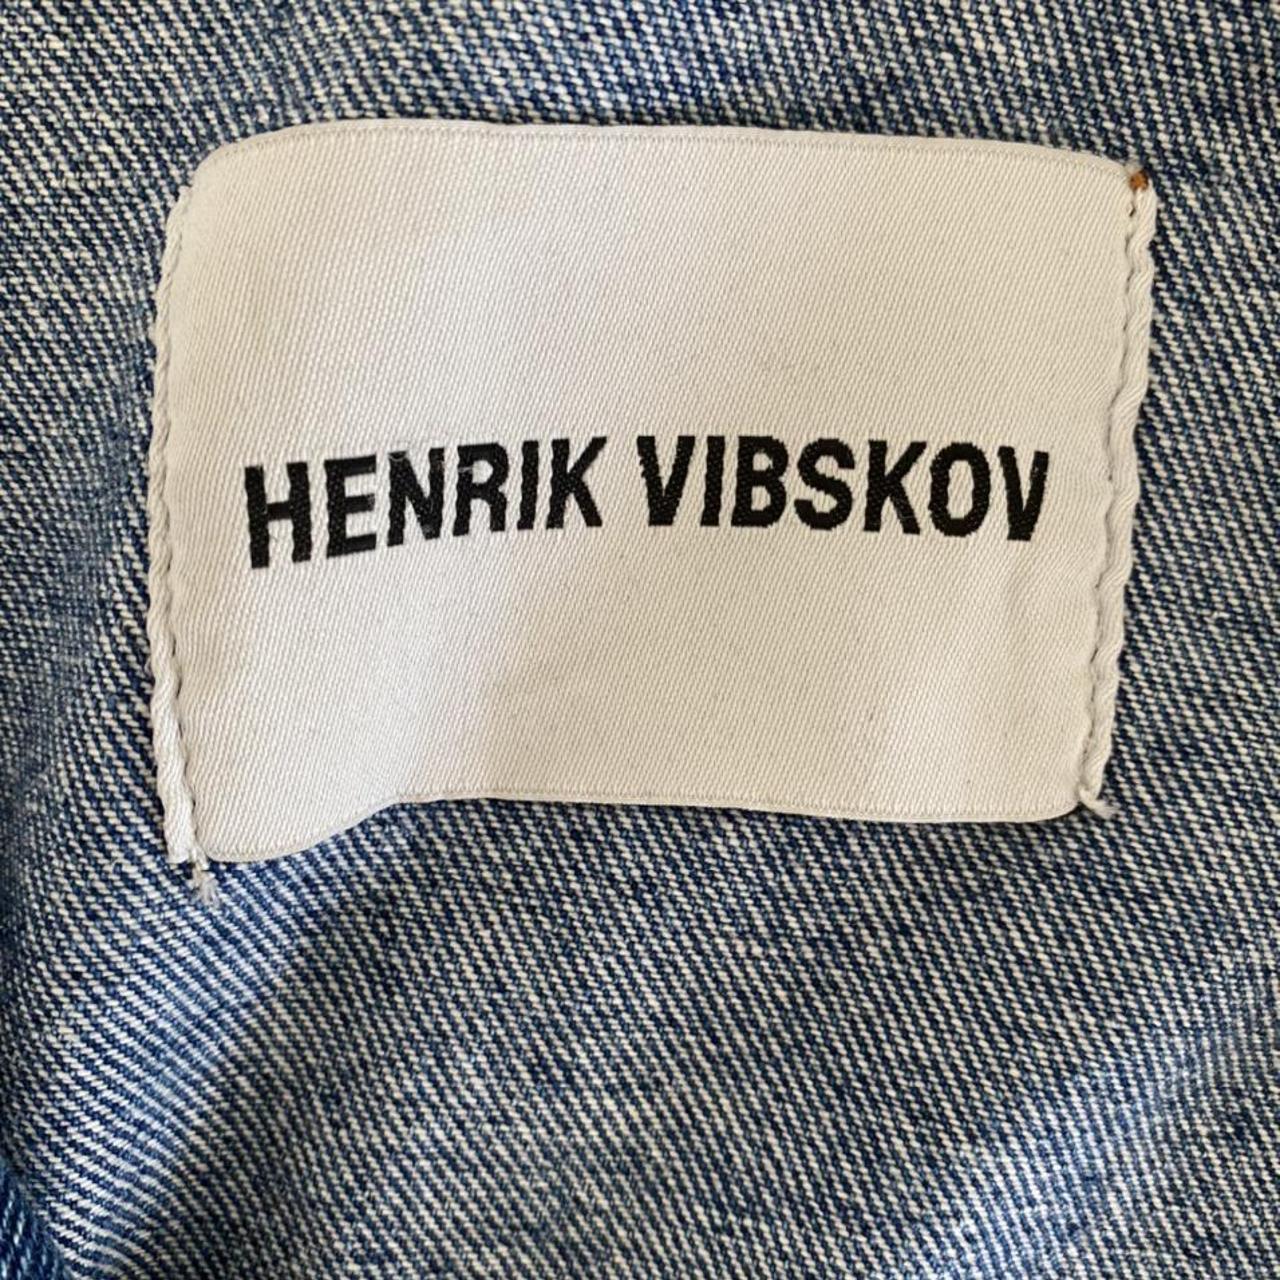 Product Image 4 - Jean jacket

#henrikvibskov